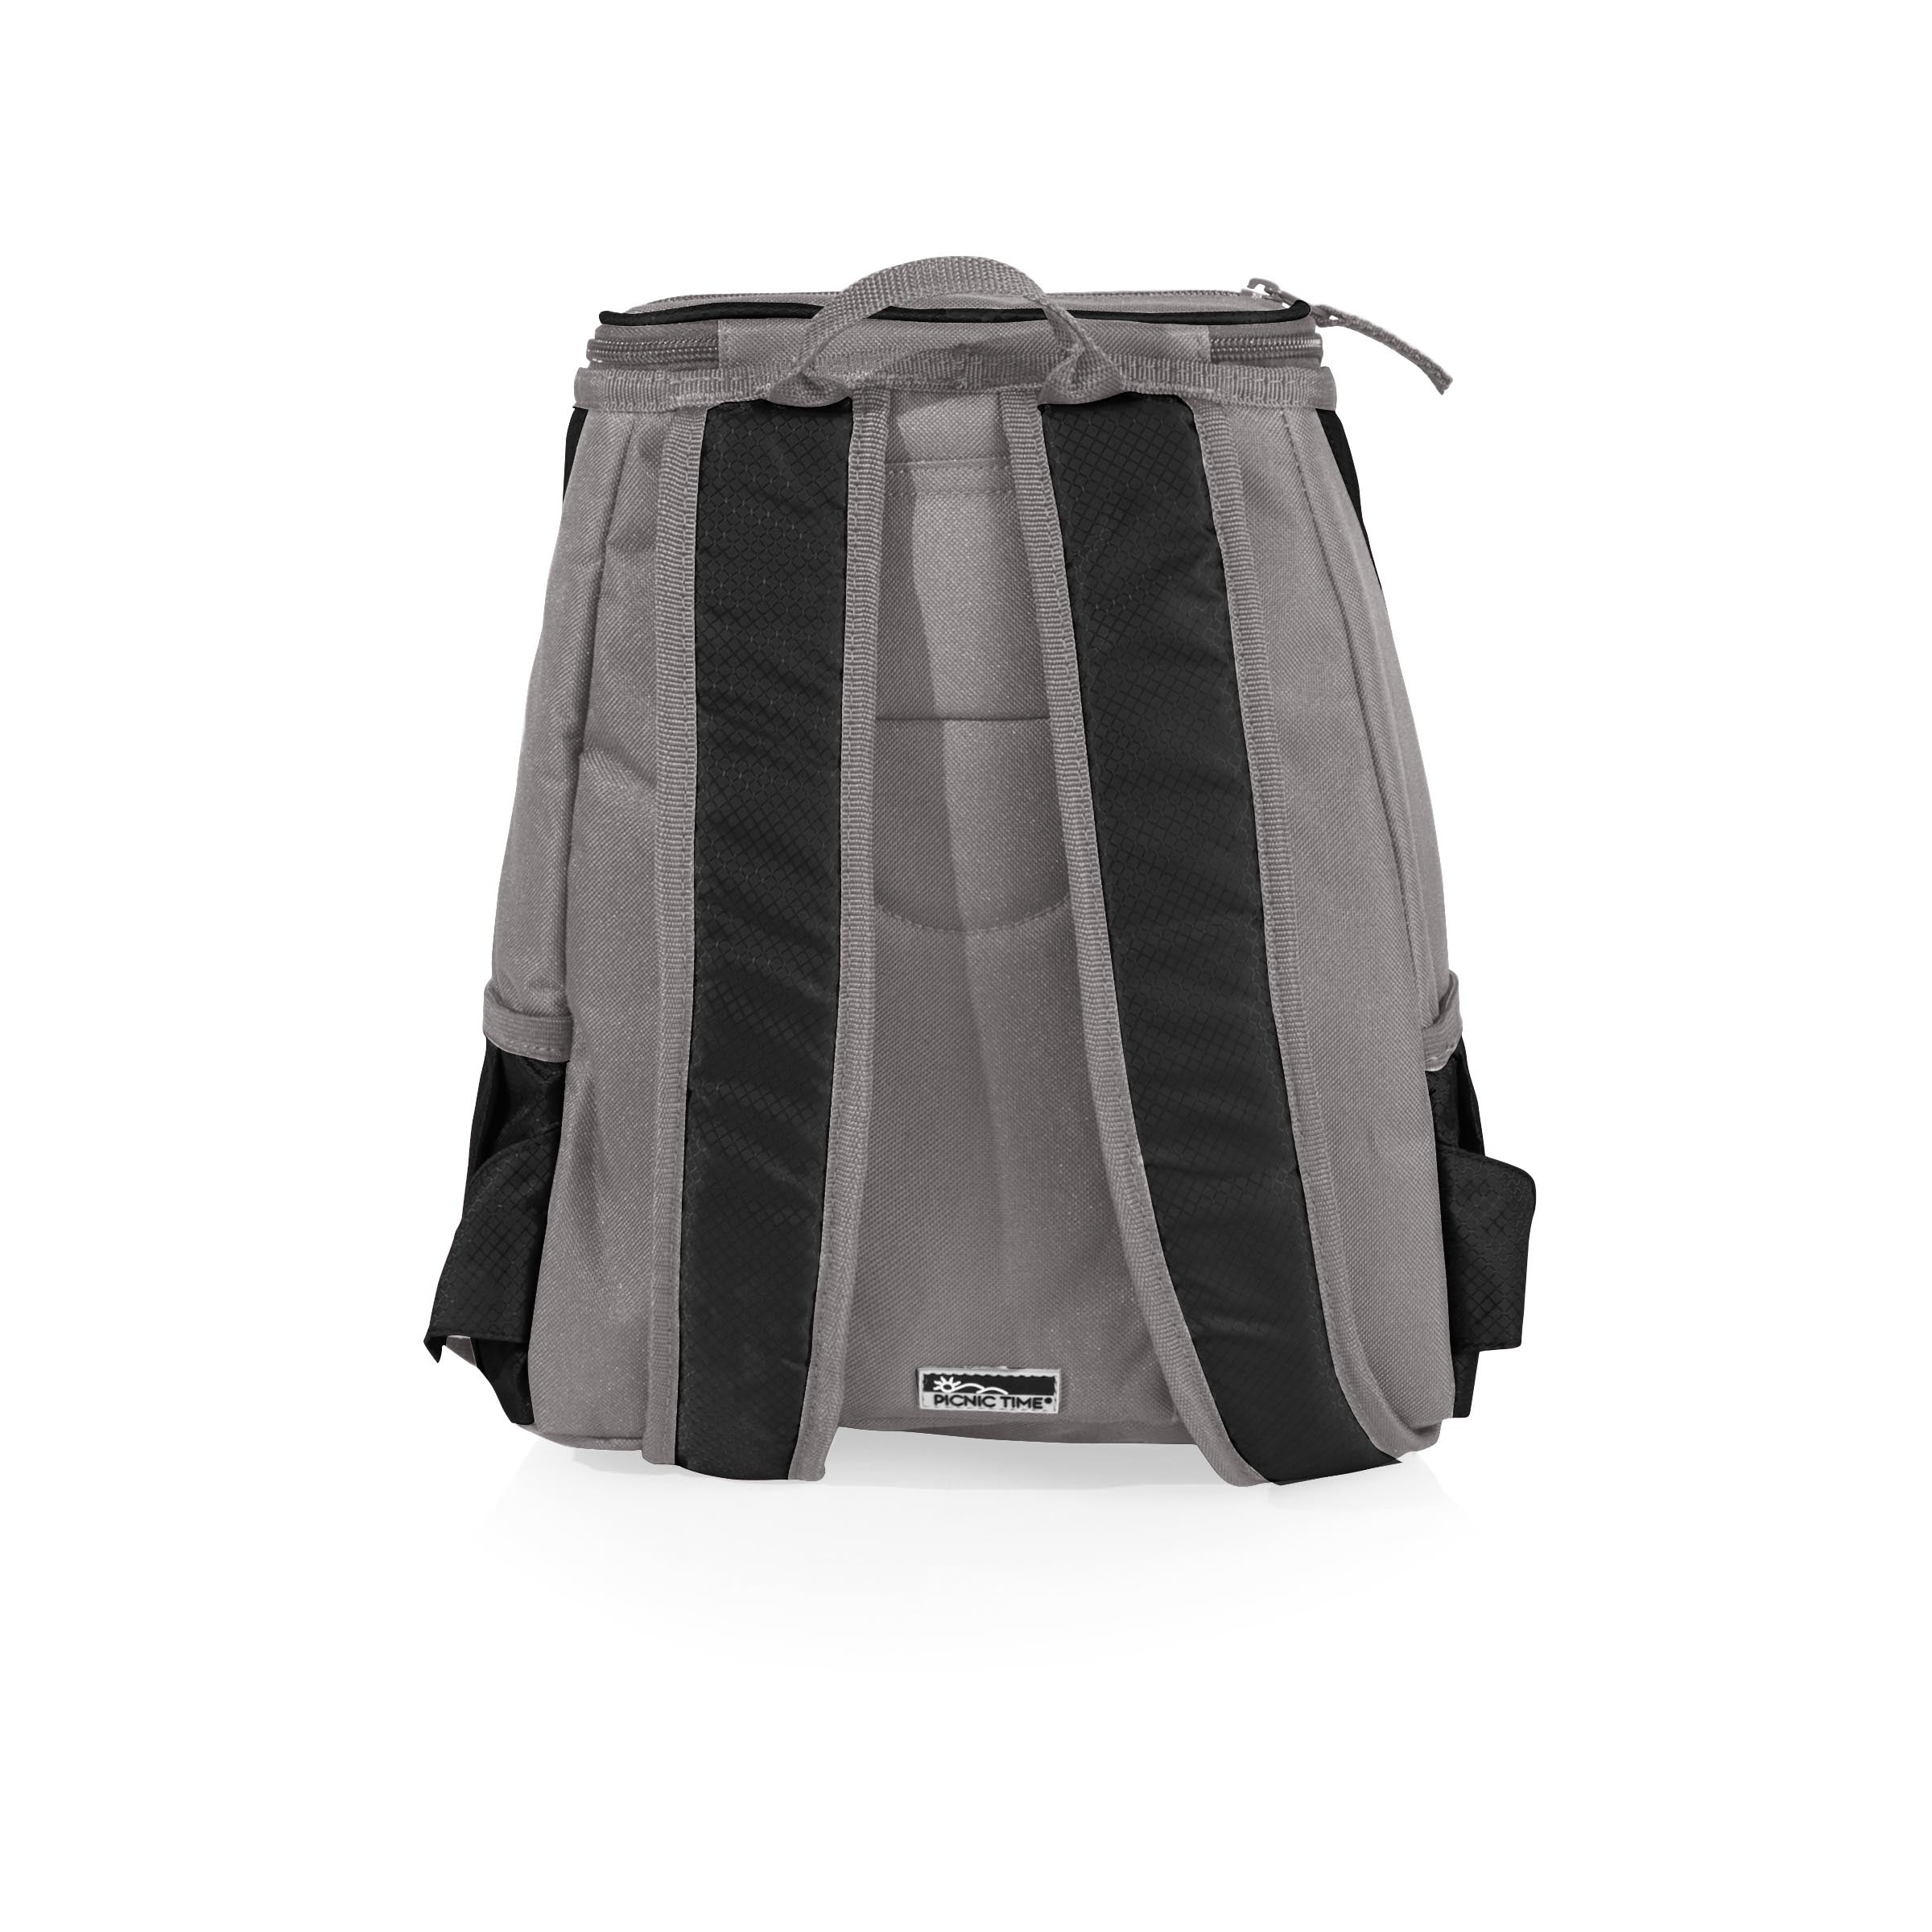 Baltimore Orioles - PTX Backpack Cooler